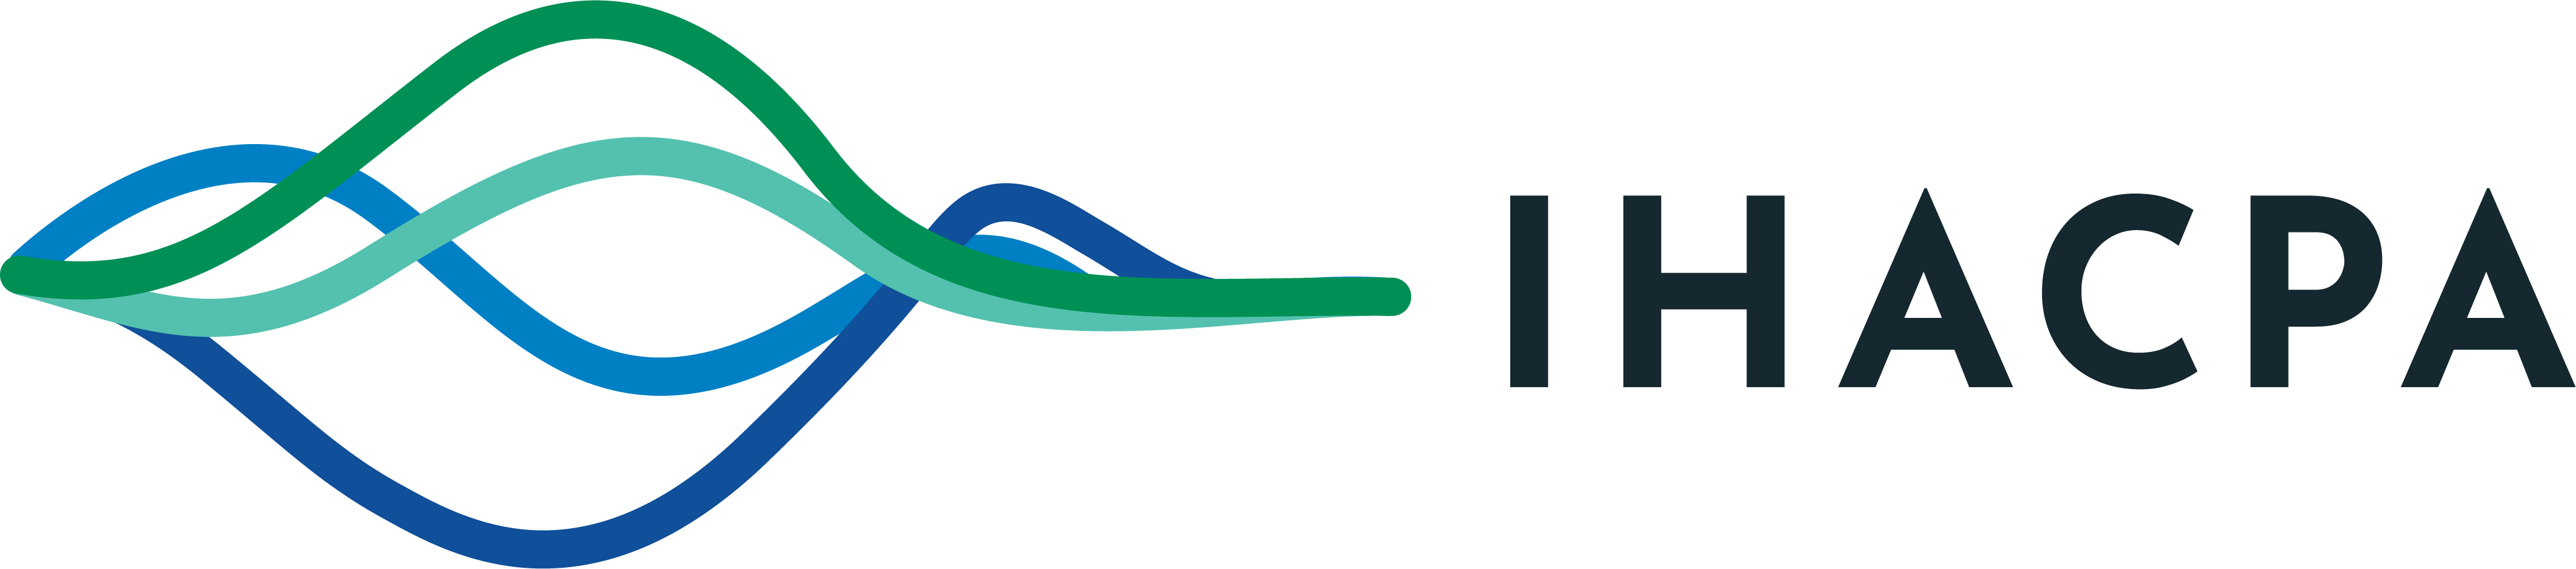 Totara Logo